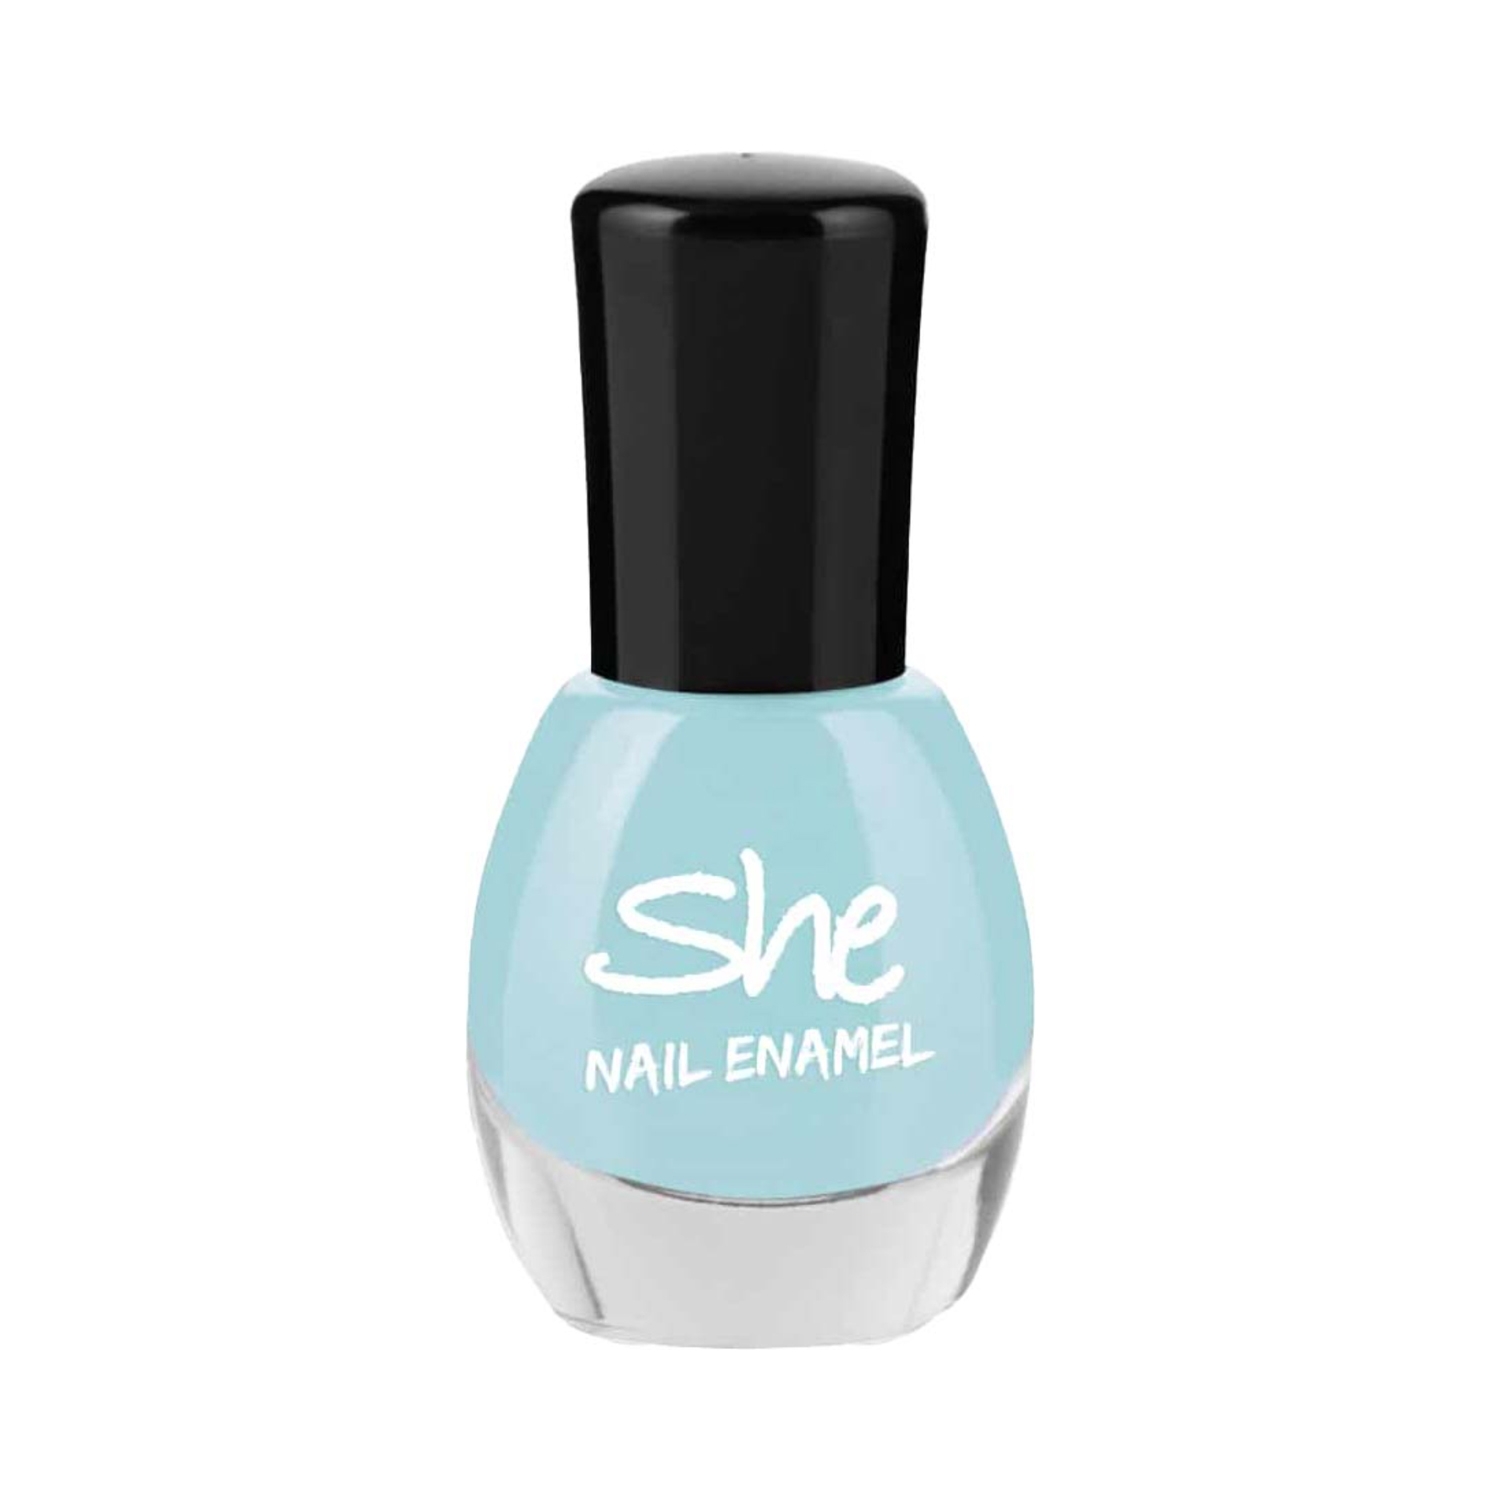 She | She Makeup Nail Enamel - 304 Pastel Blue (8ml)